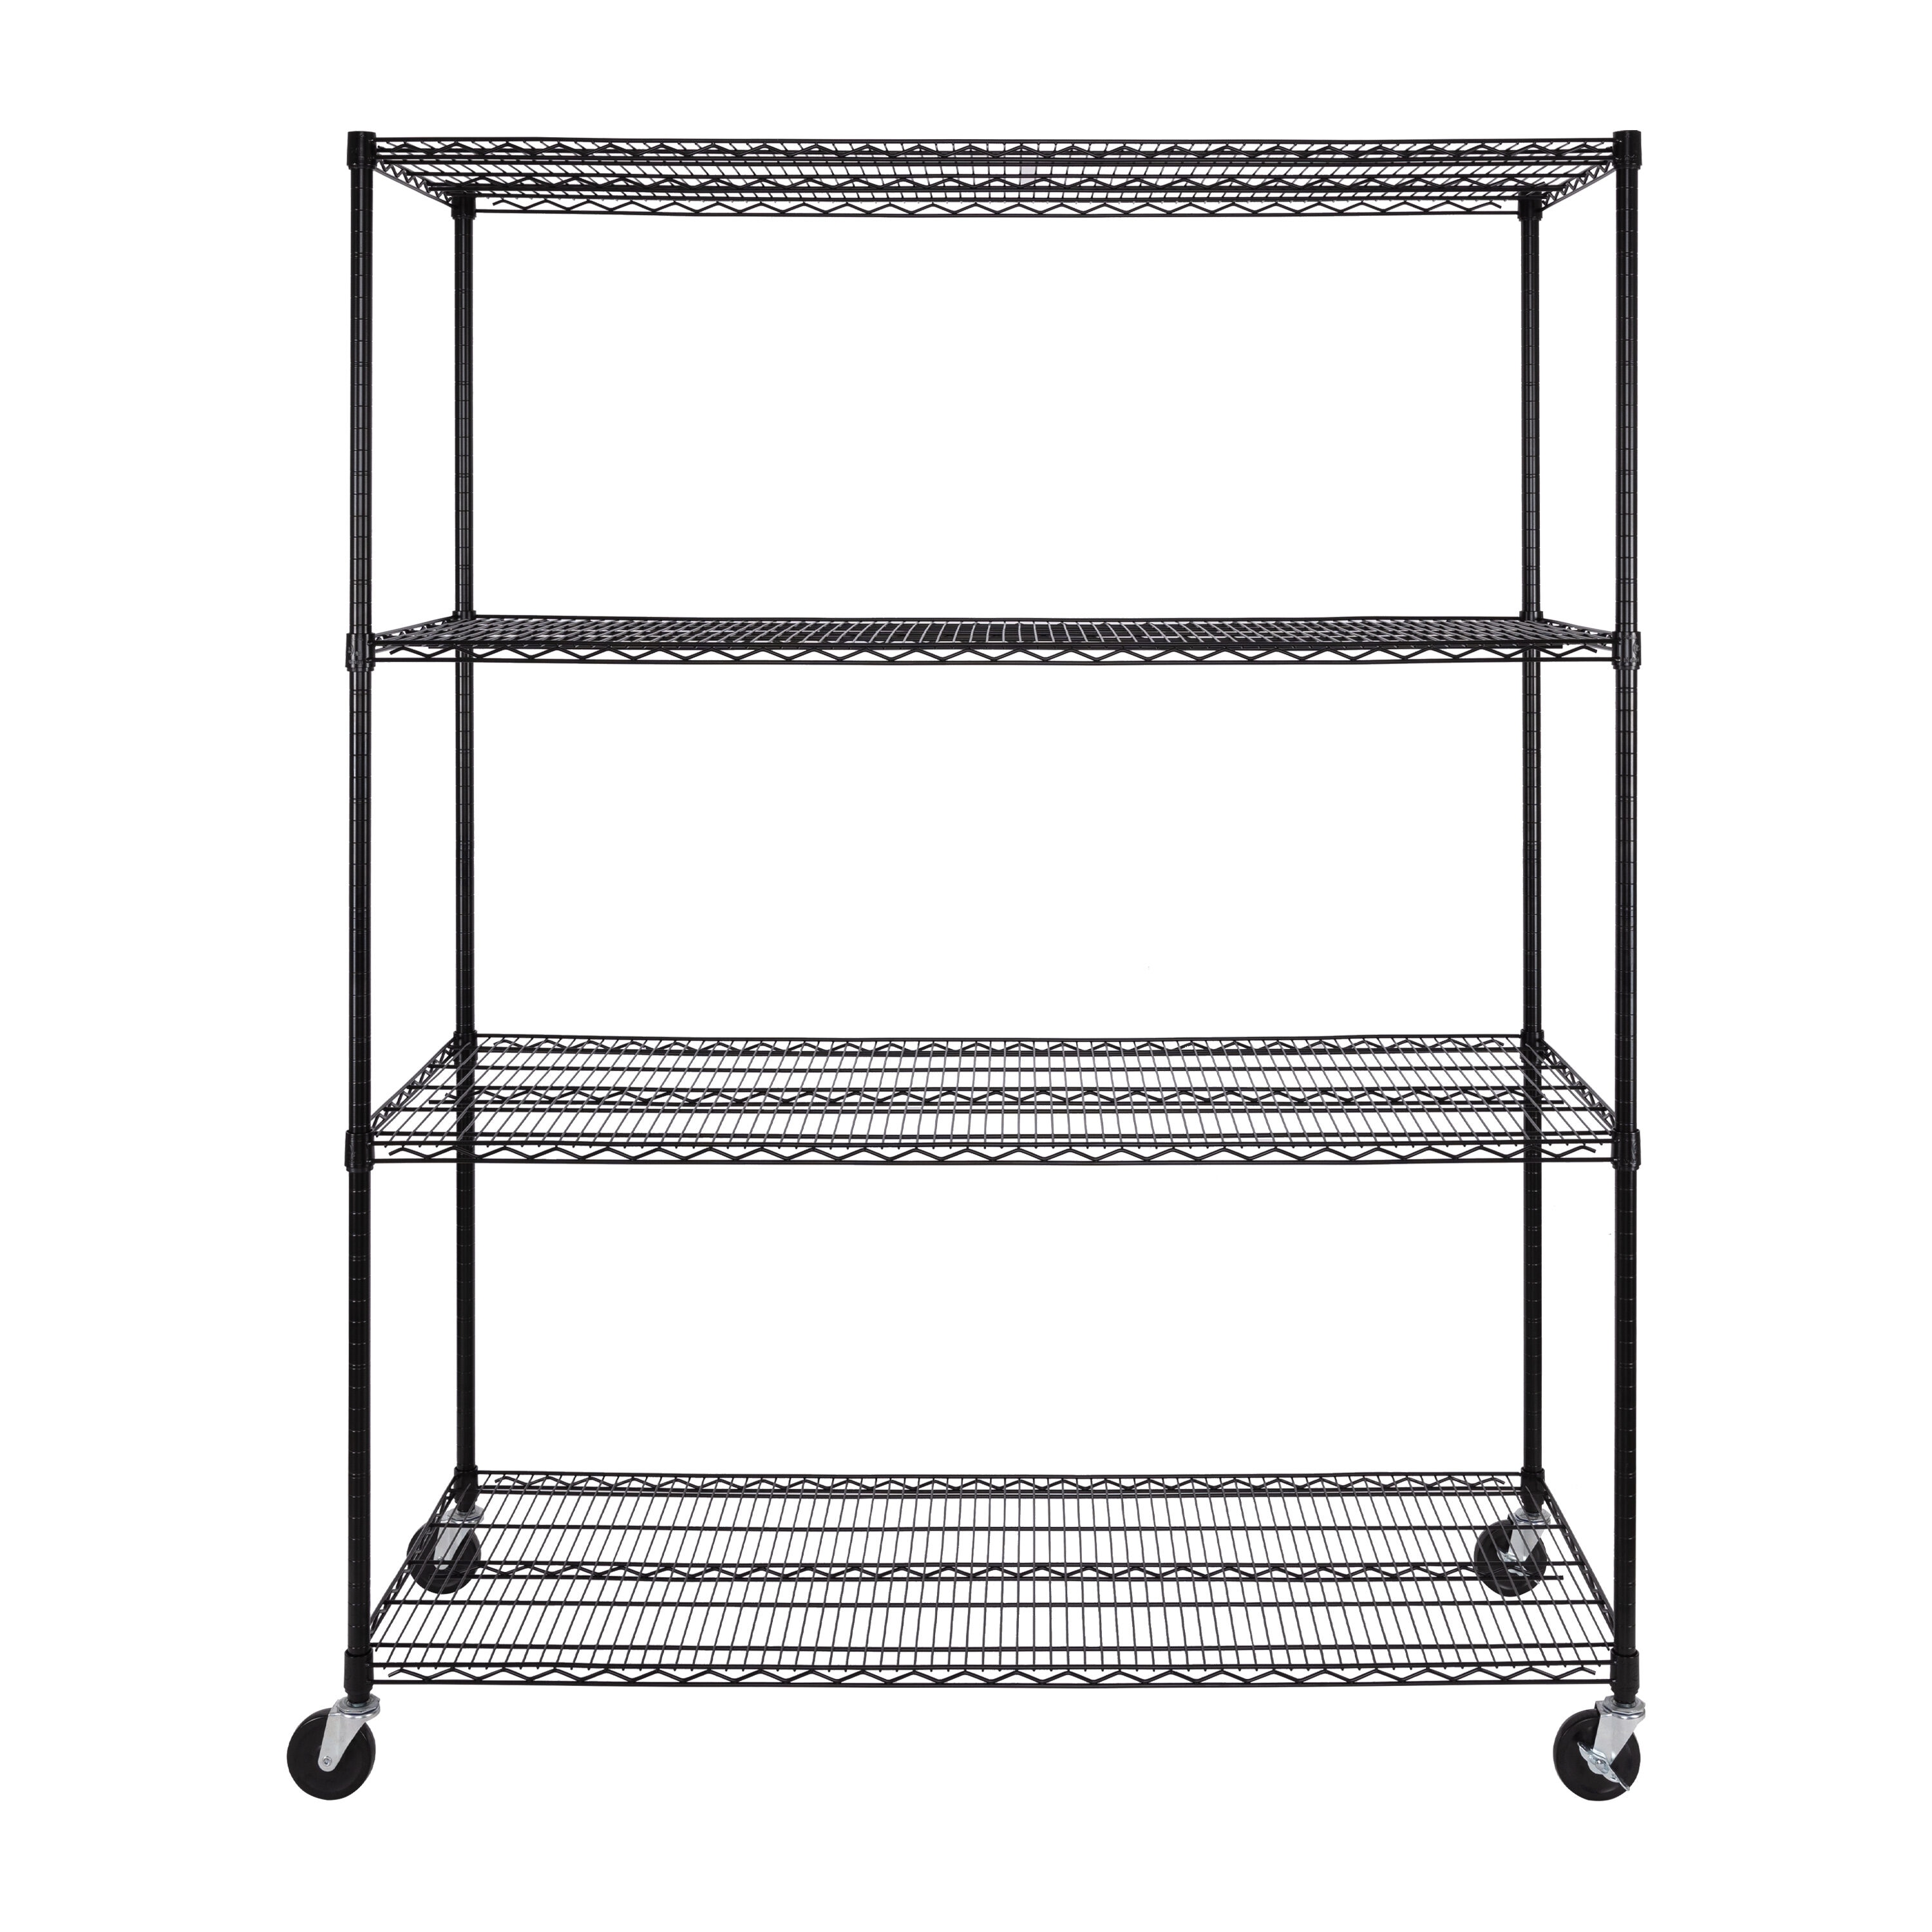 Sterling Shelf Liners - Set of 3 - Fits Sandusky Wire Shelves